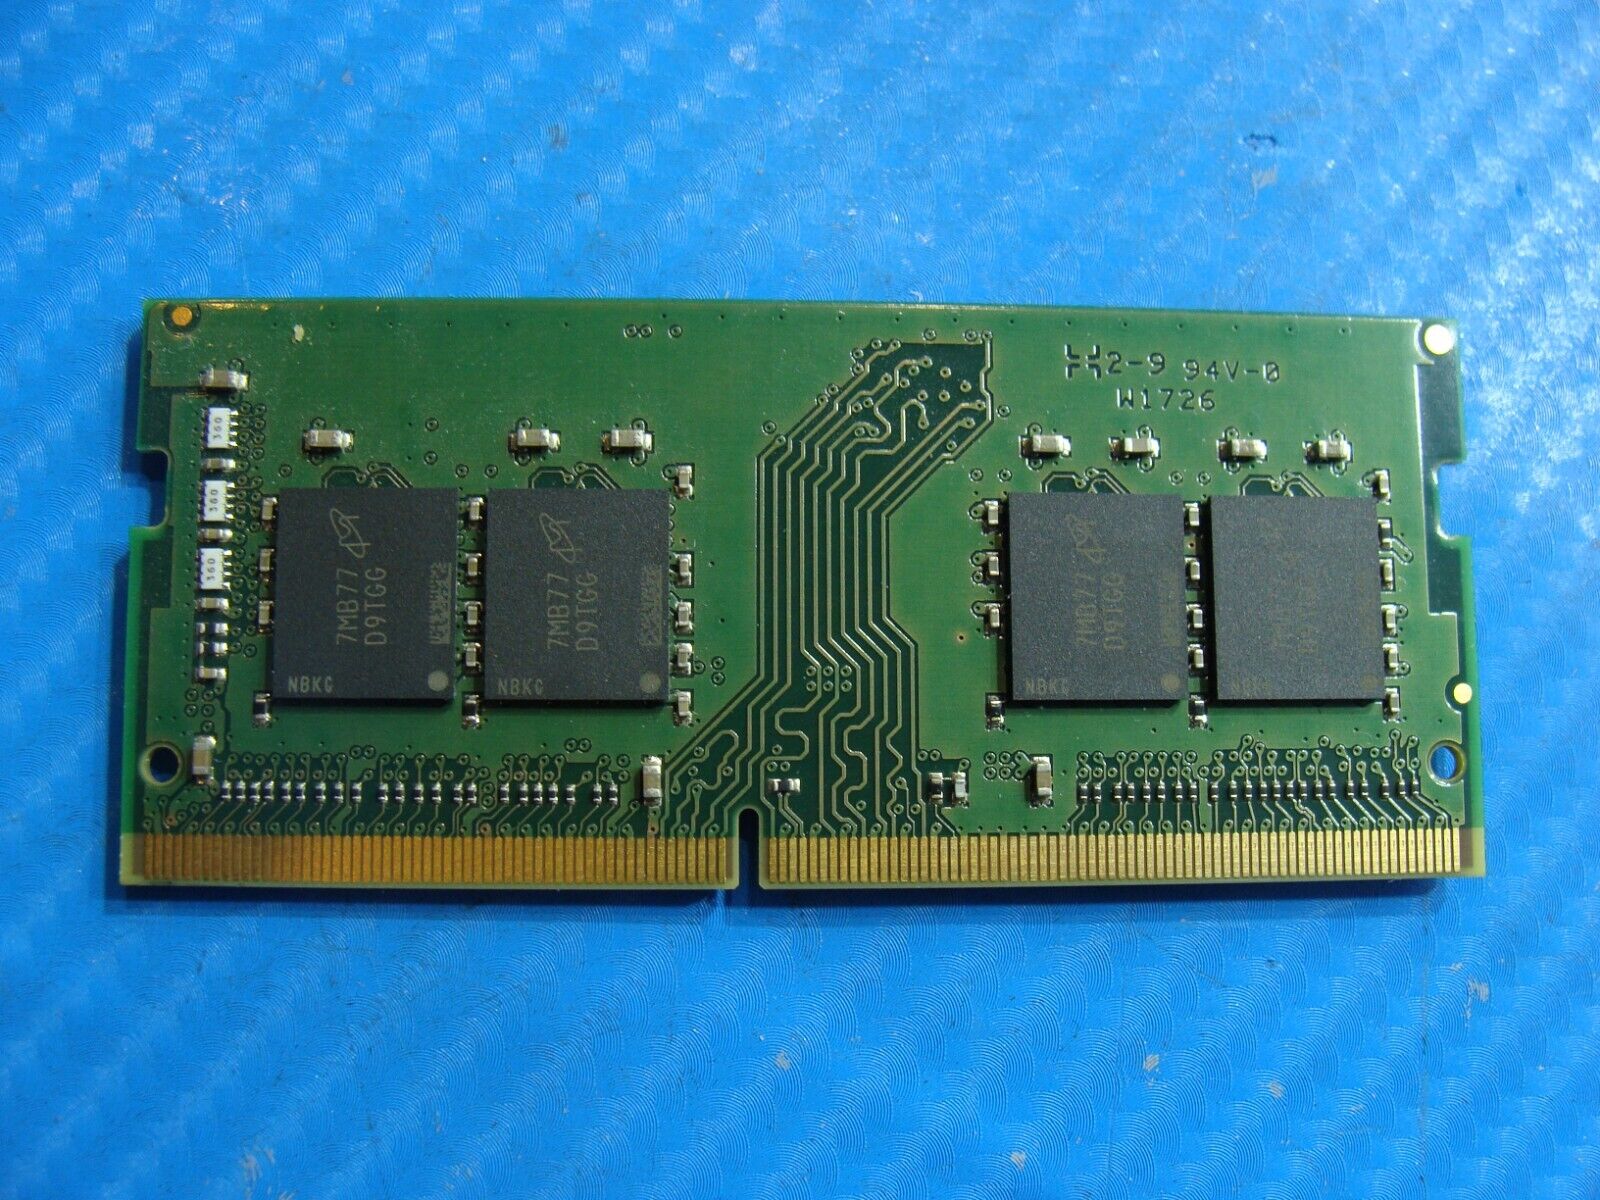 HP 17-ak013cy Micron 4GB PC4-2666V Memory RAM SO-DIMM 862397-855